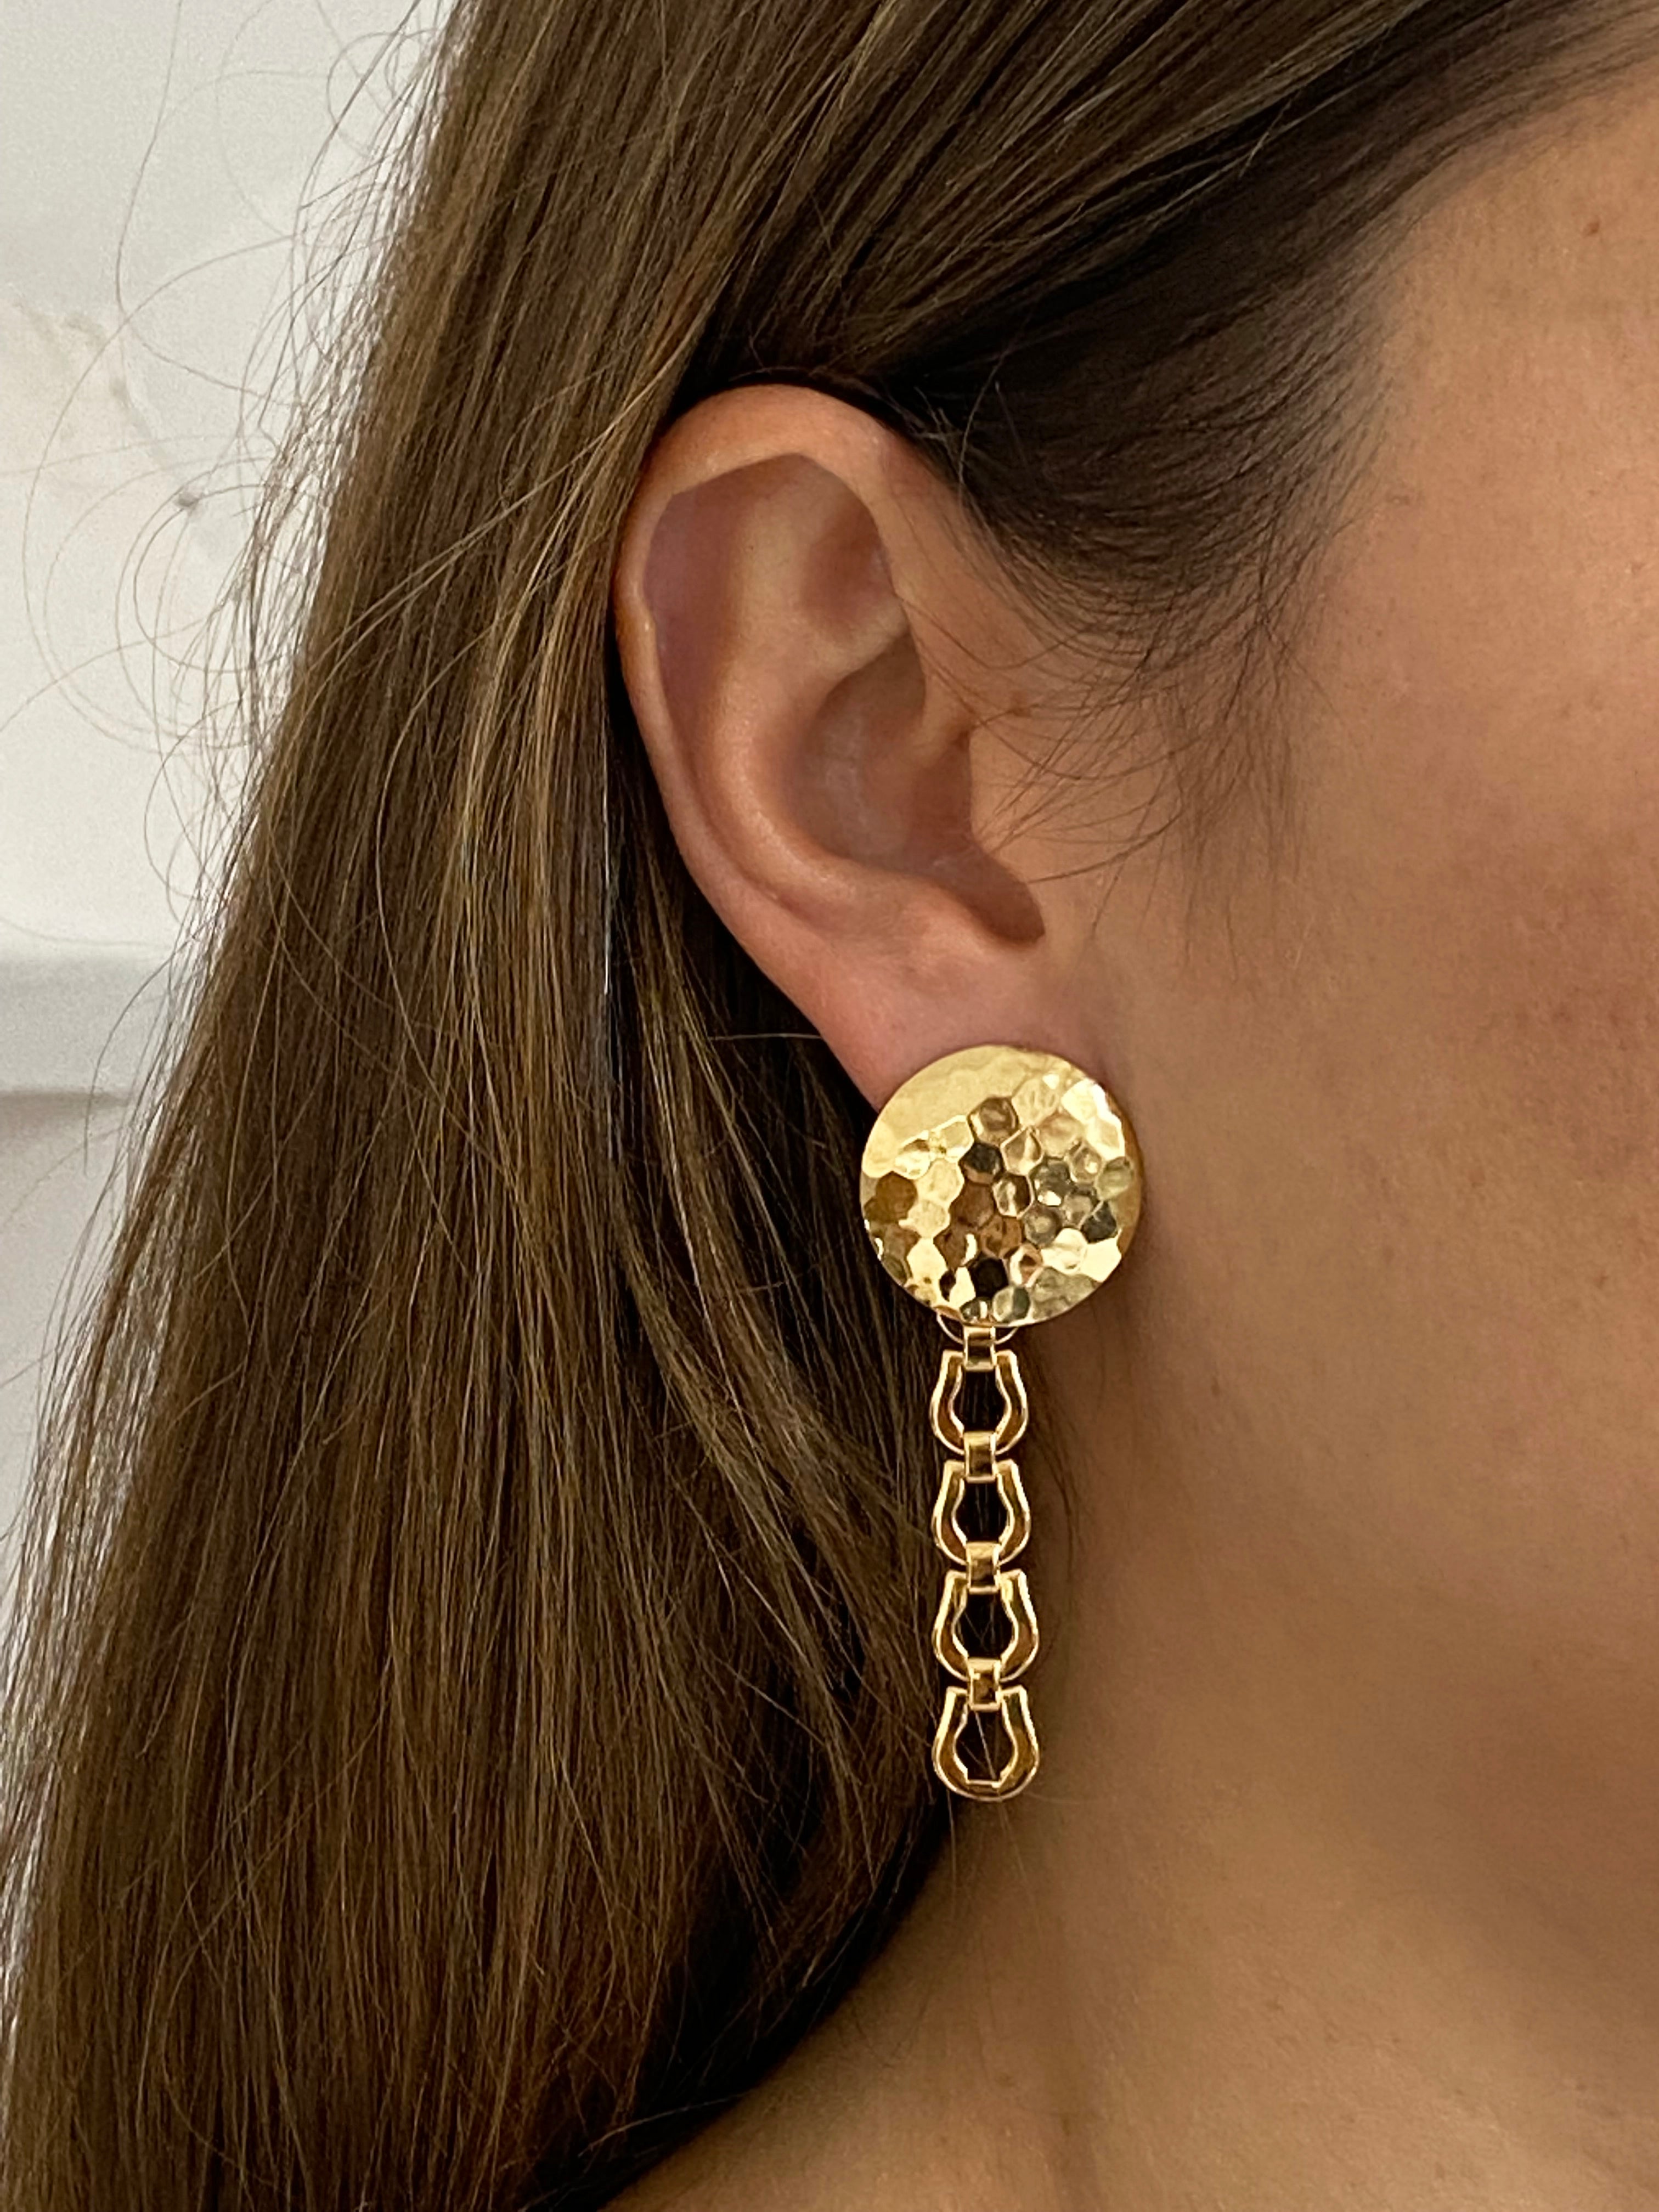 llayers-jewelry-upcycling-gold-long-chain-earrings-011-brooklyn-newyork-2